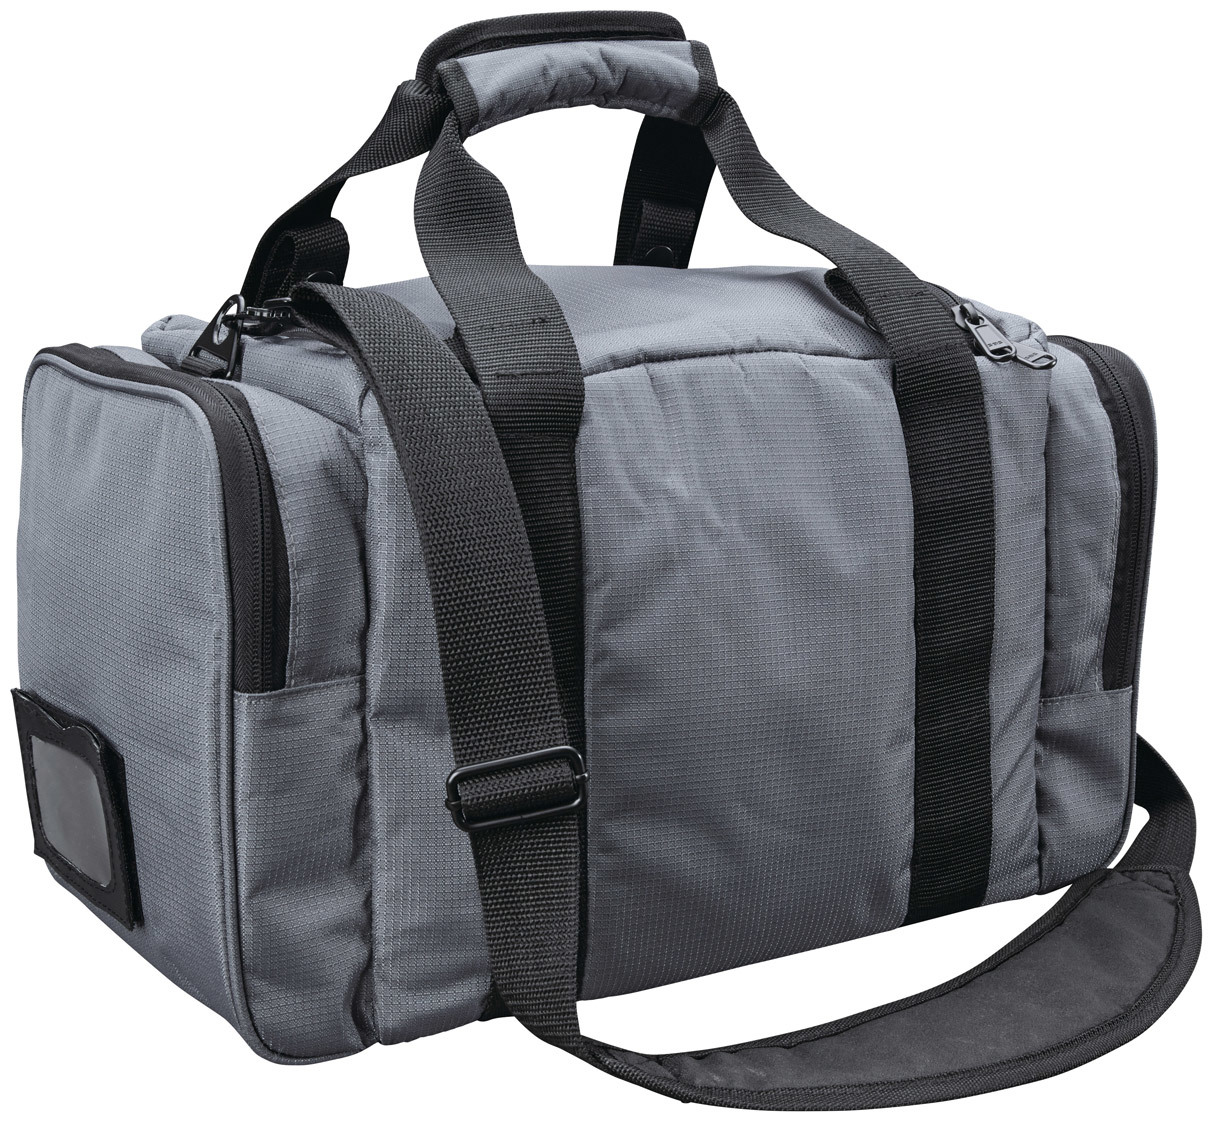 Hoppe's 9 Medium Range Bag Shooting Accessories Carrier Gray Color ...